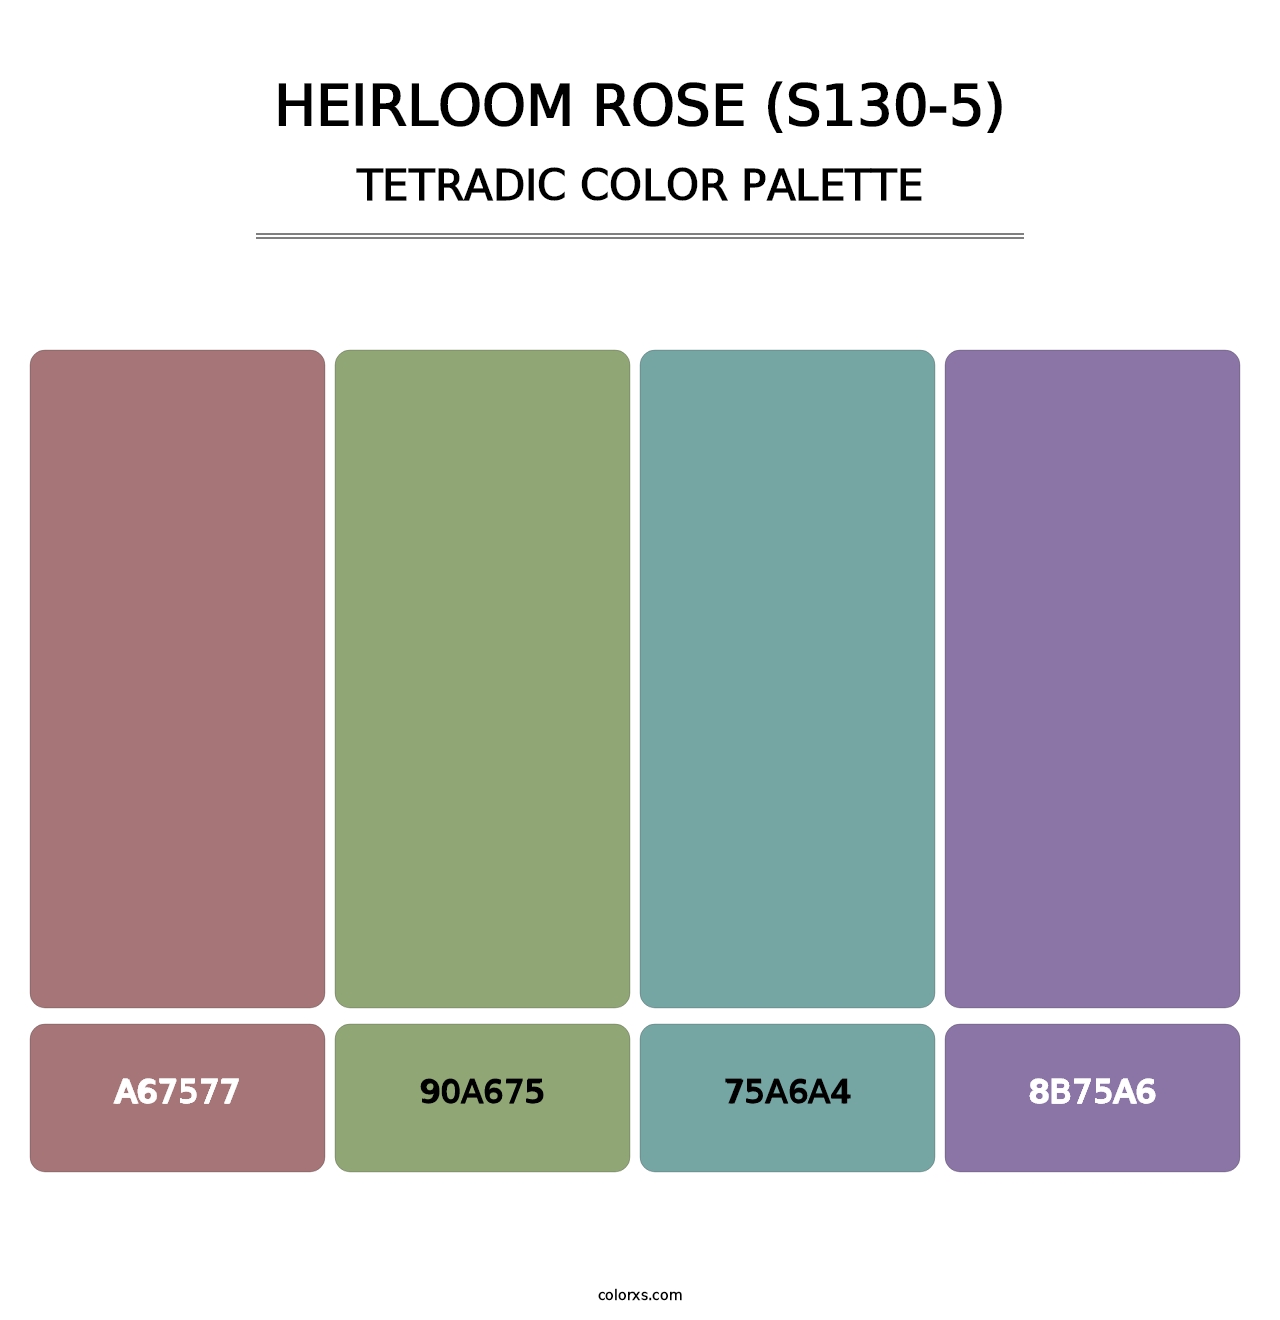 Heirloom Rose (S130-5) - Tetradic Color Palette